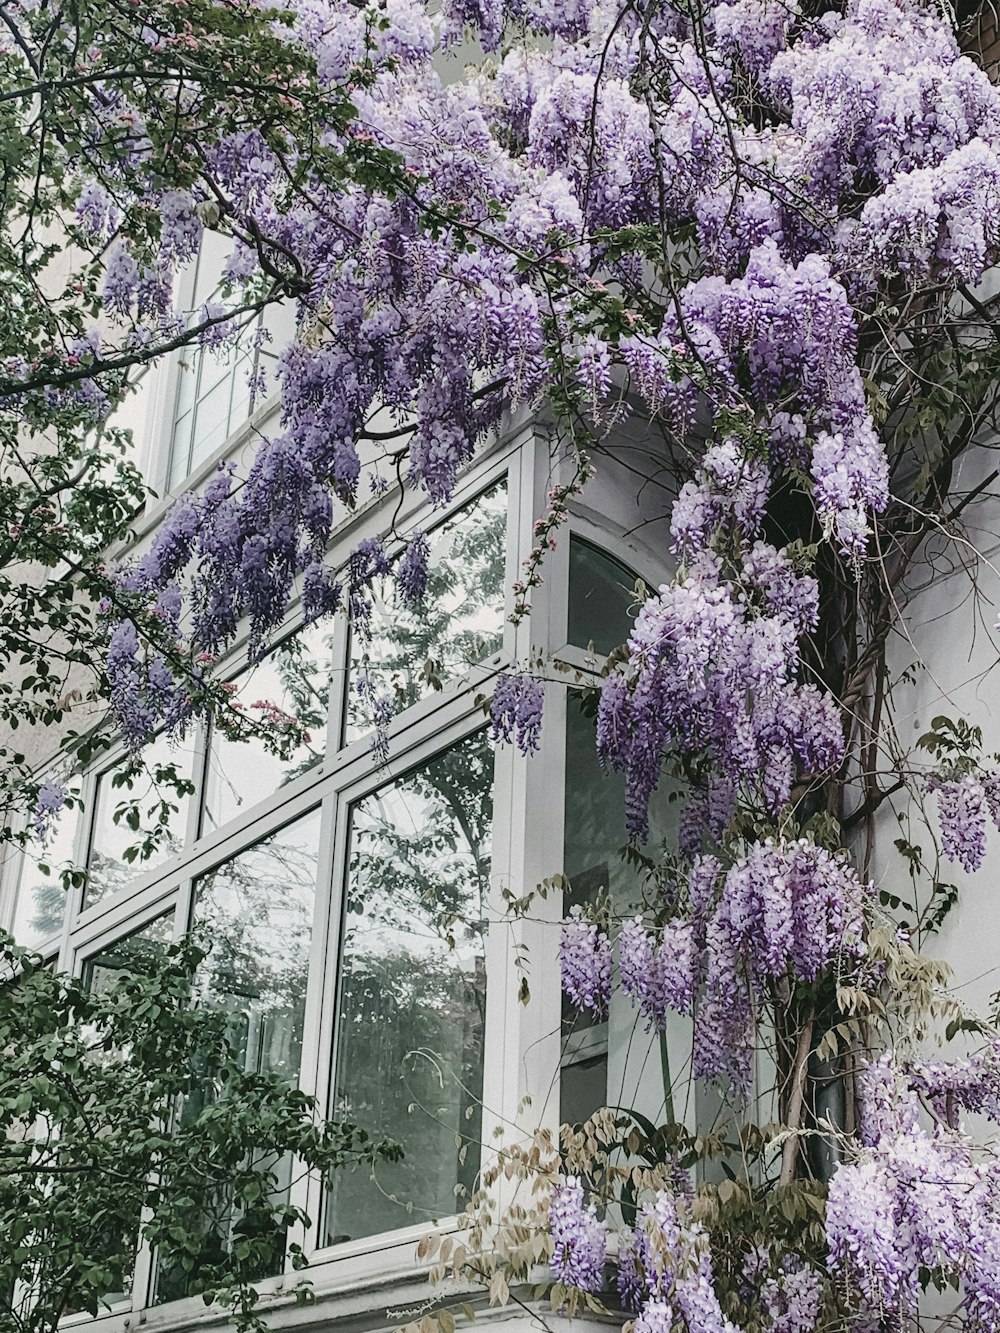 arbustes lilas près de la fenêtre en verre